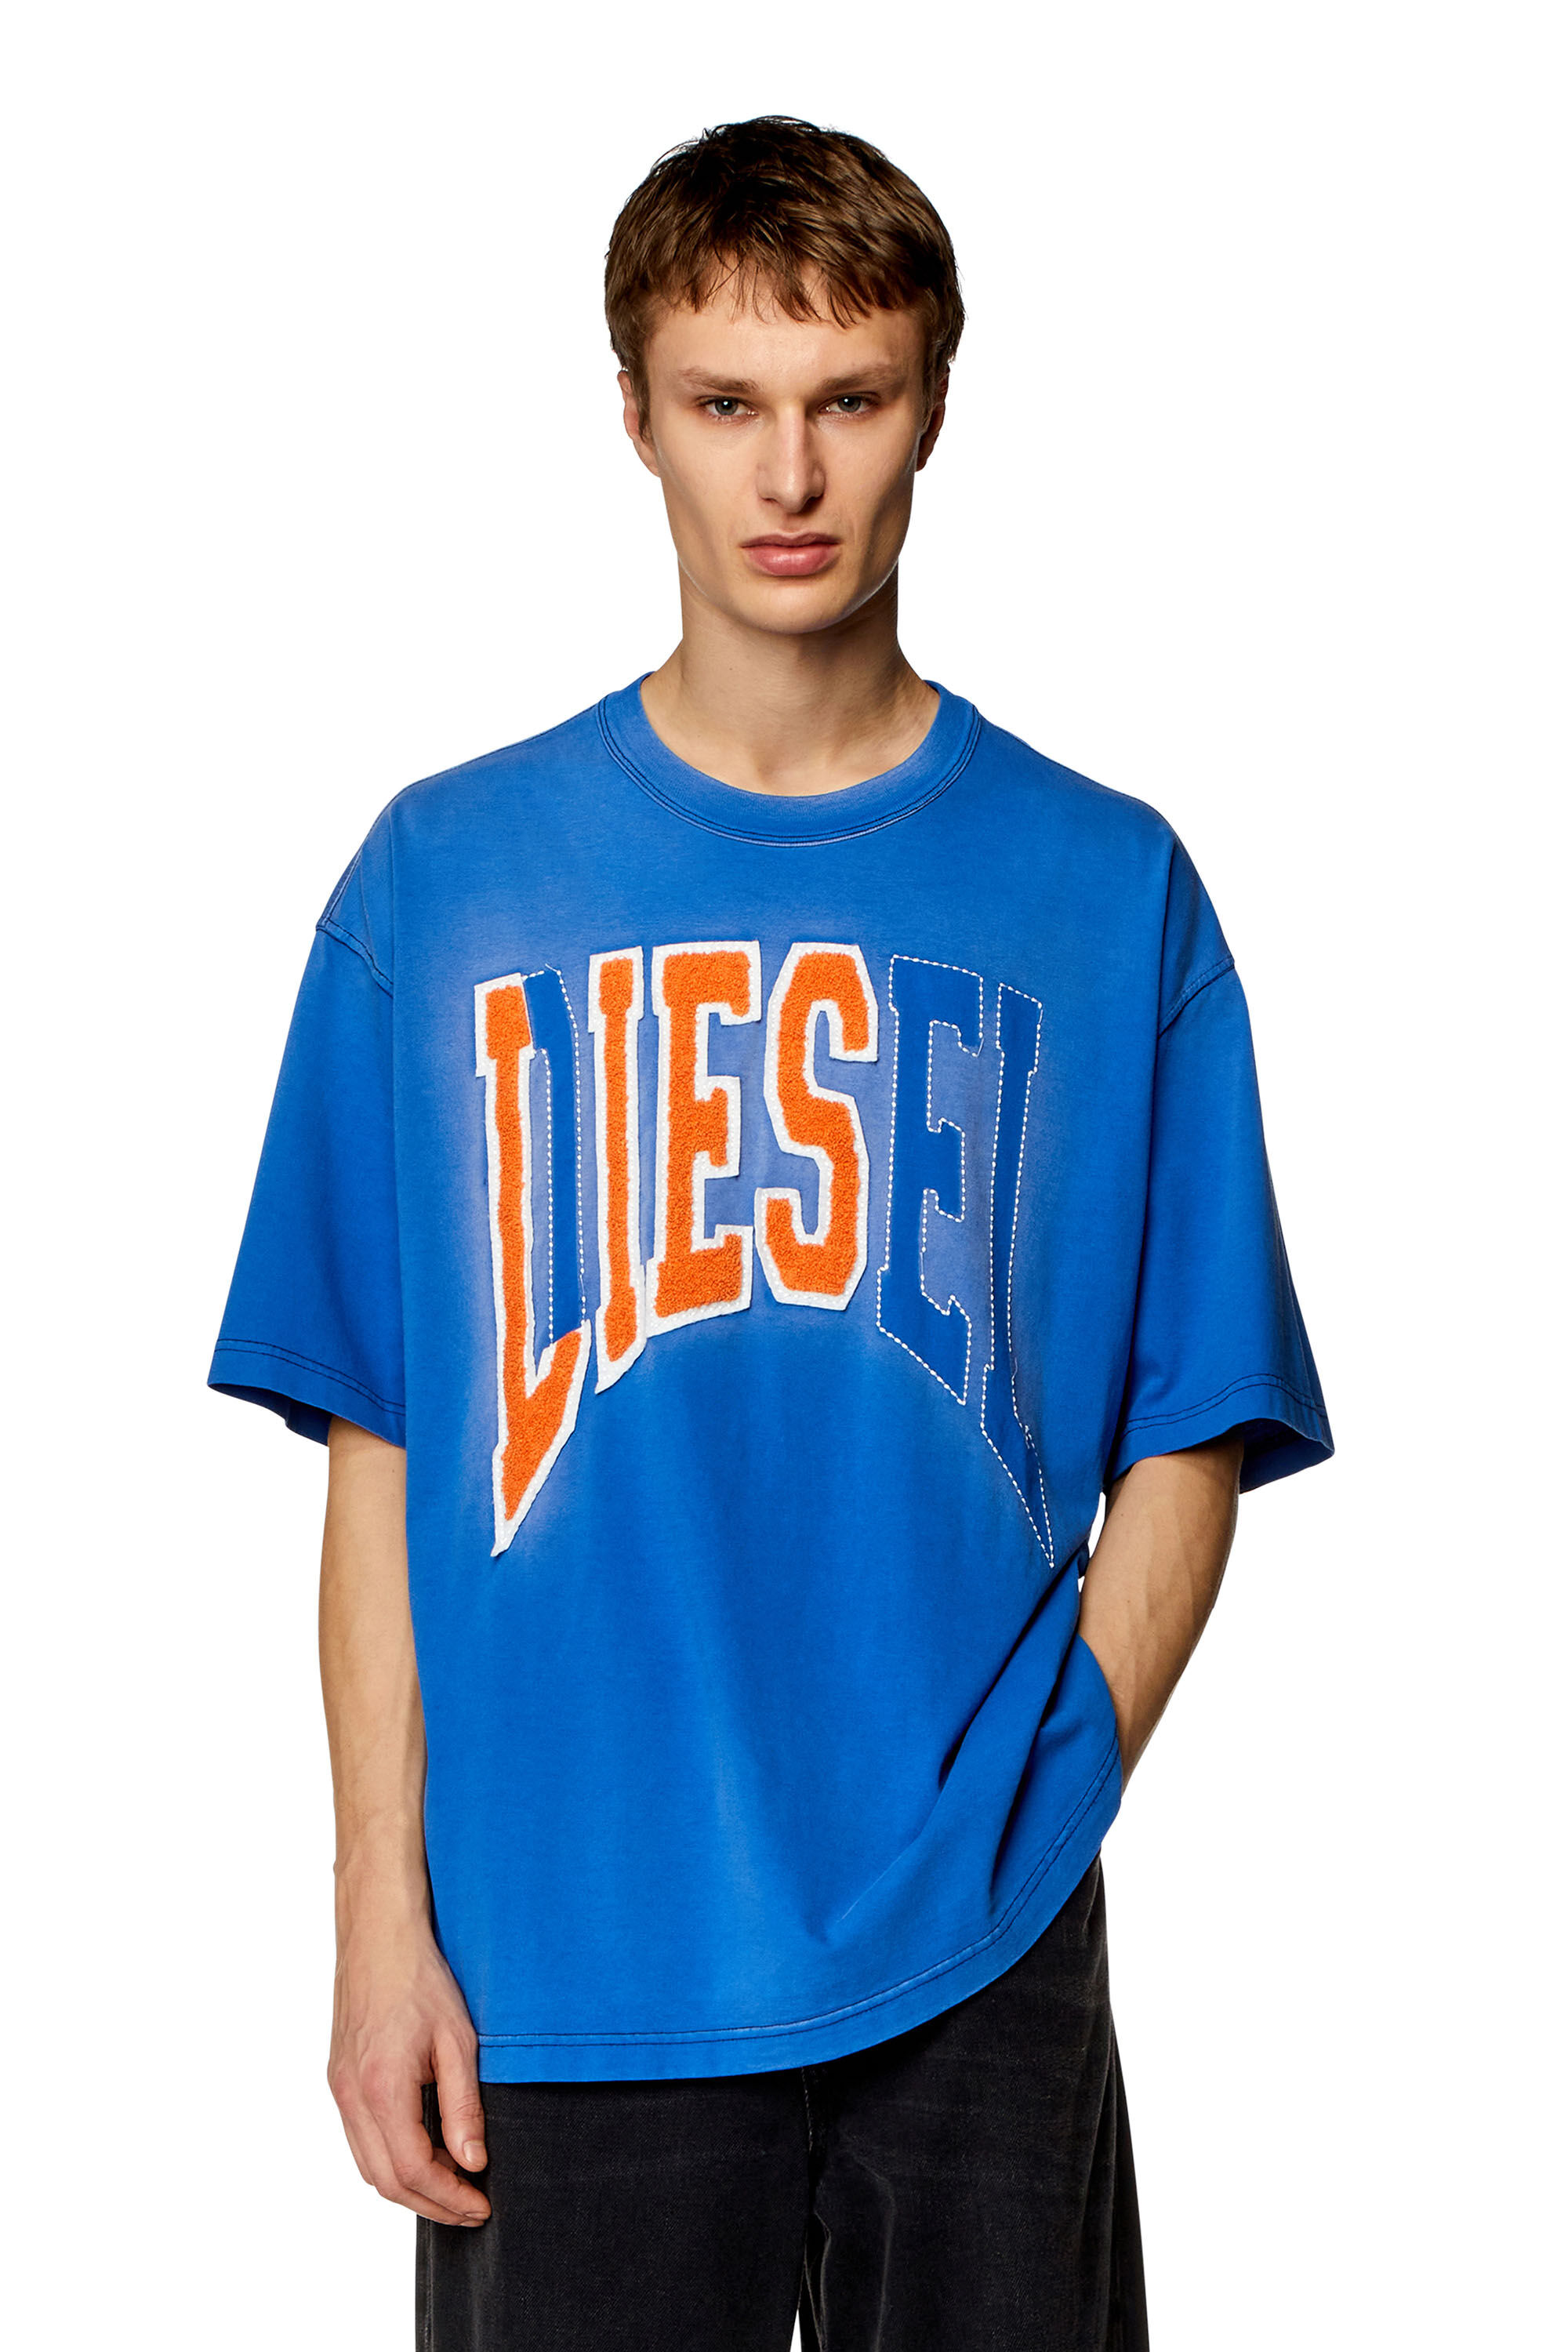 Diesel - T-WASH-N, Homme T-shirt oversize avec logo Diesel Lies in Bleu - Image 3